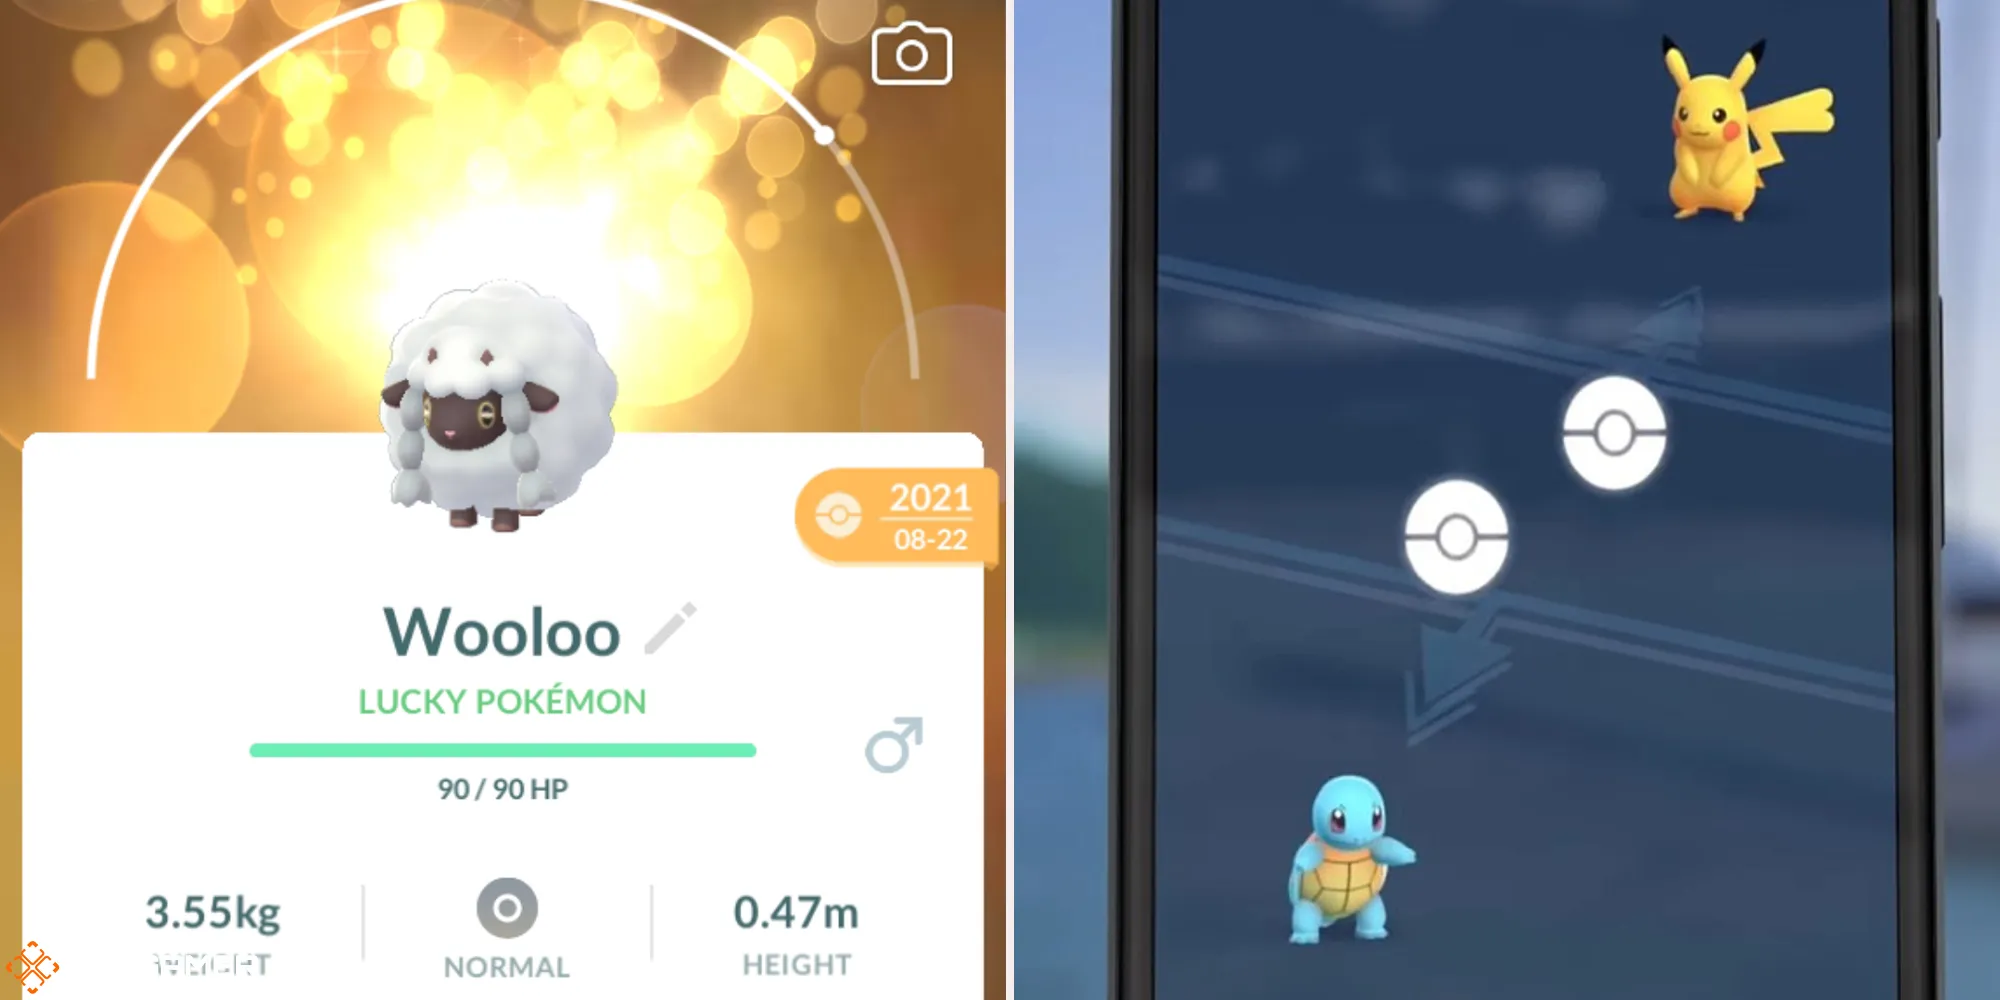 Pokemon Go - lucky wooloo (왼쪽), 전화로 거래하는 모습 (오른쪽)